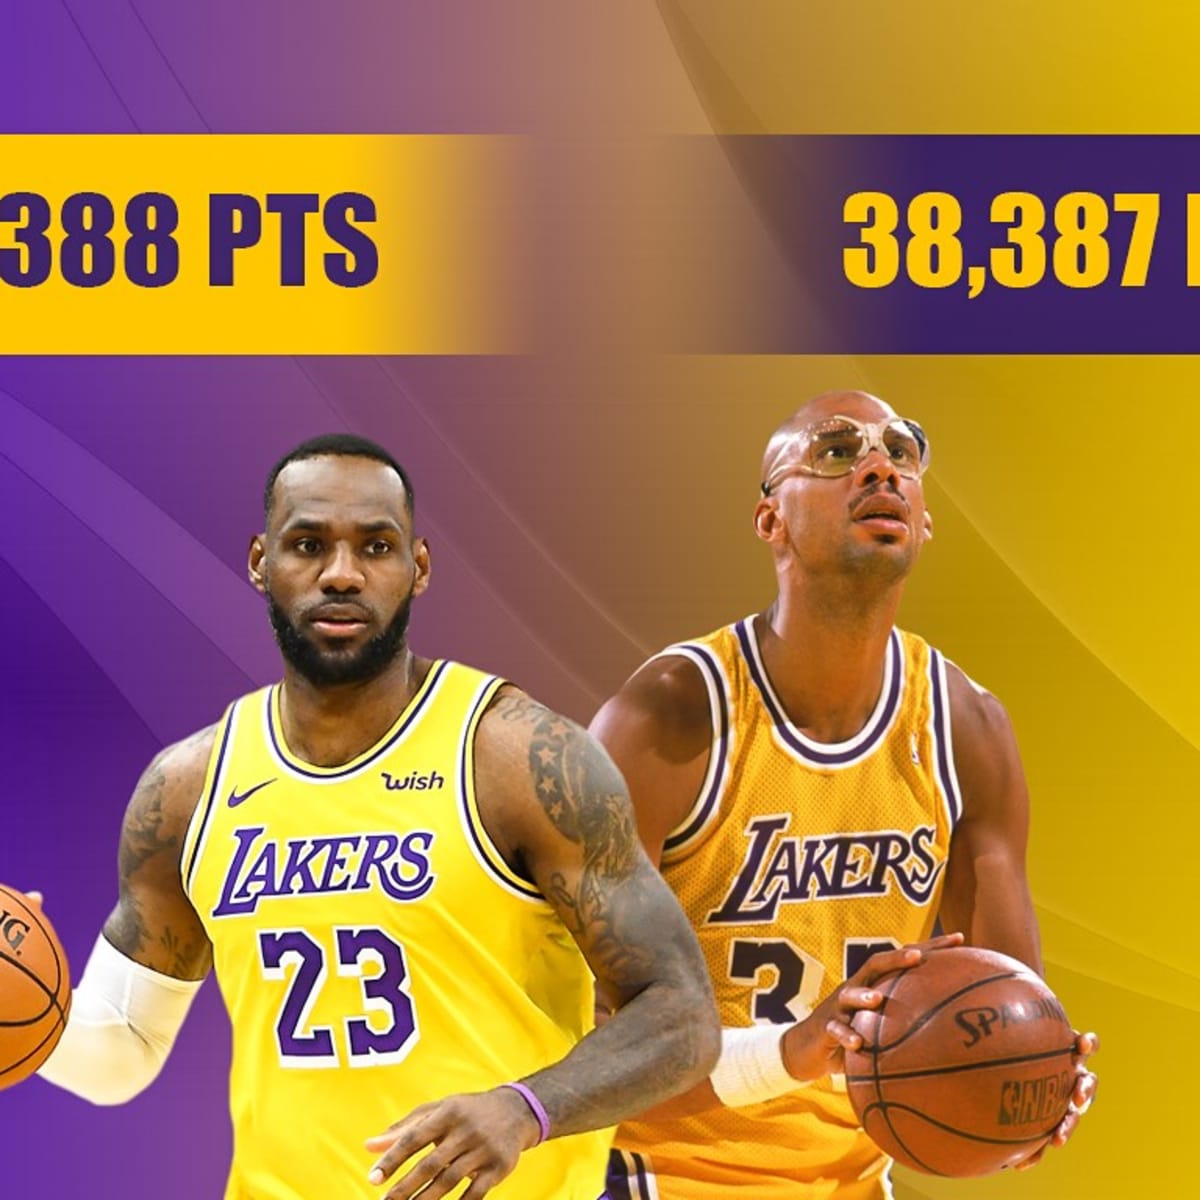 LeBron James becomes highest scorer in NBA history, surpassing Kareem  Abdul-Jabbar